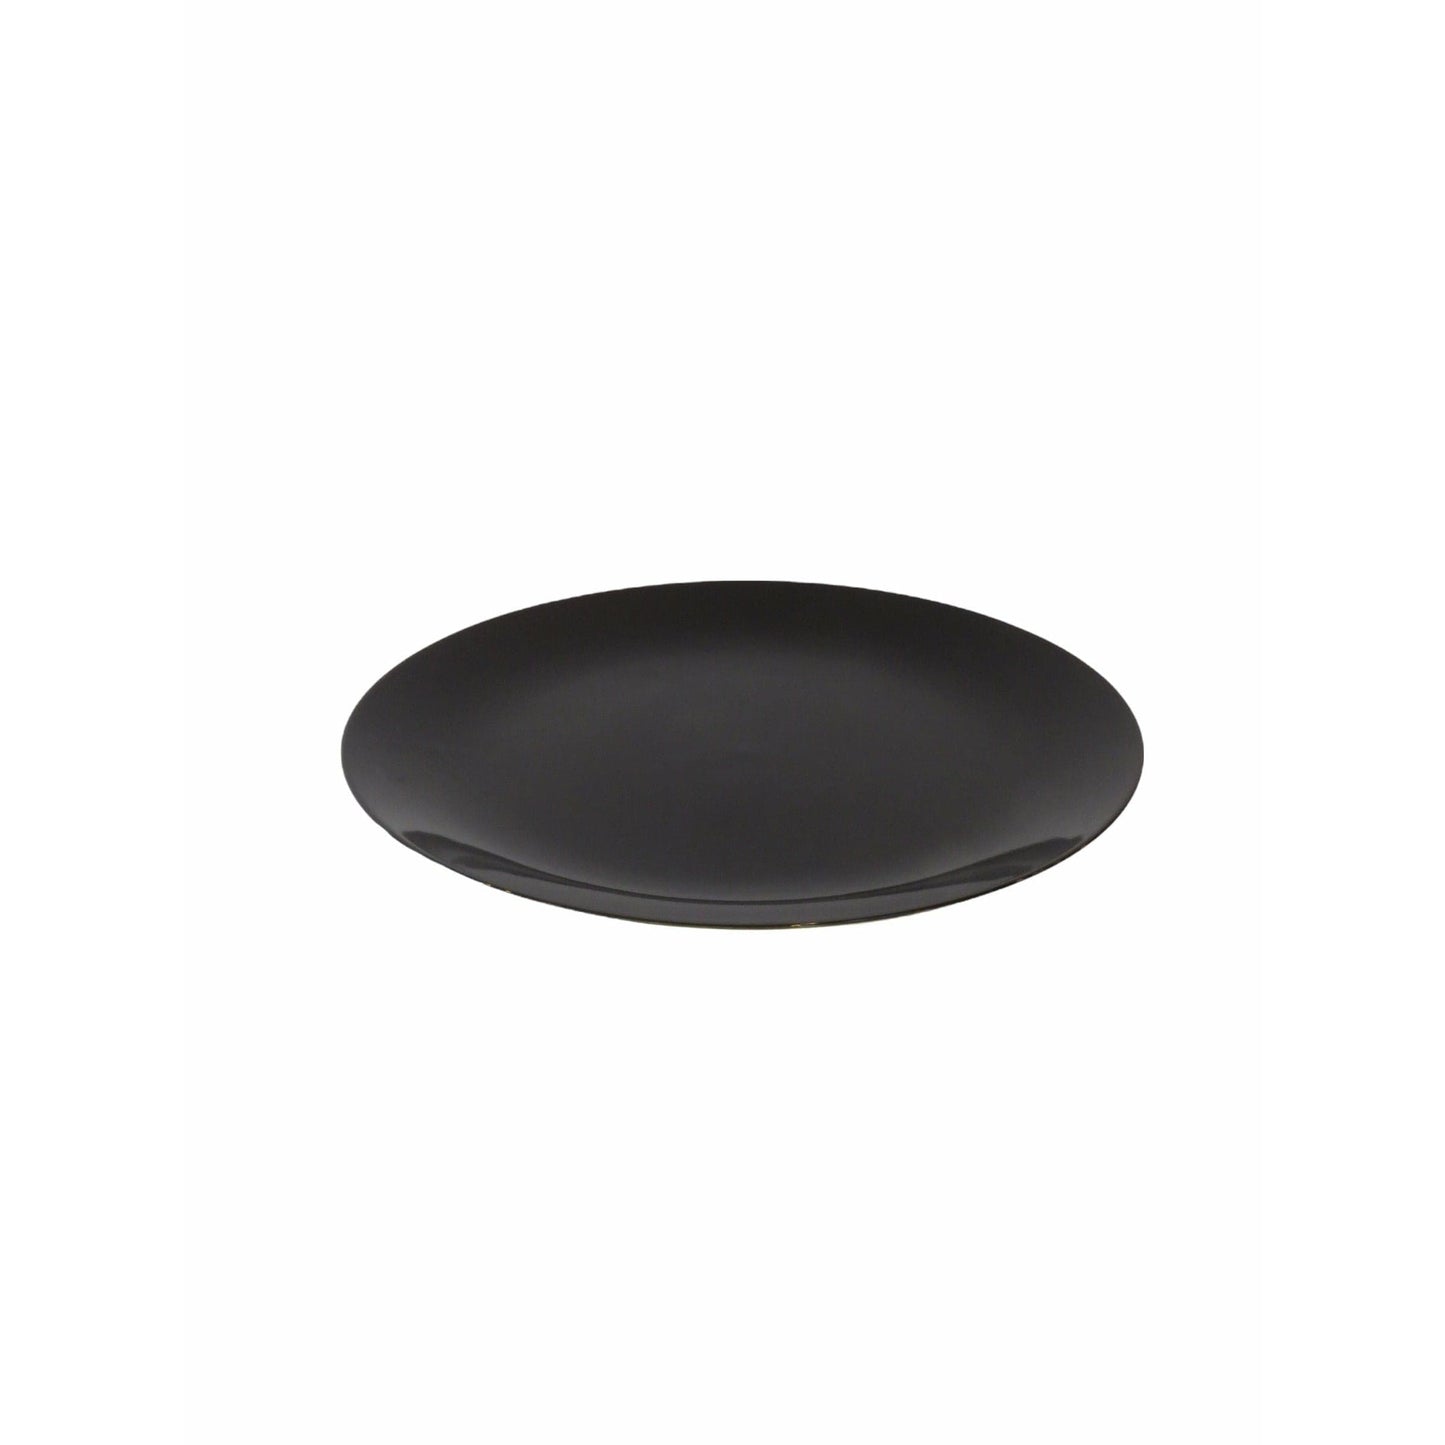 Ann Demeulemeester Home Plates 28 centimeters / Black / Porcelain Ann Demeulemeester for Serax 28 cm plates (set of two)